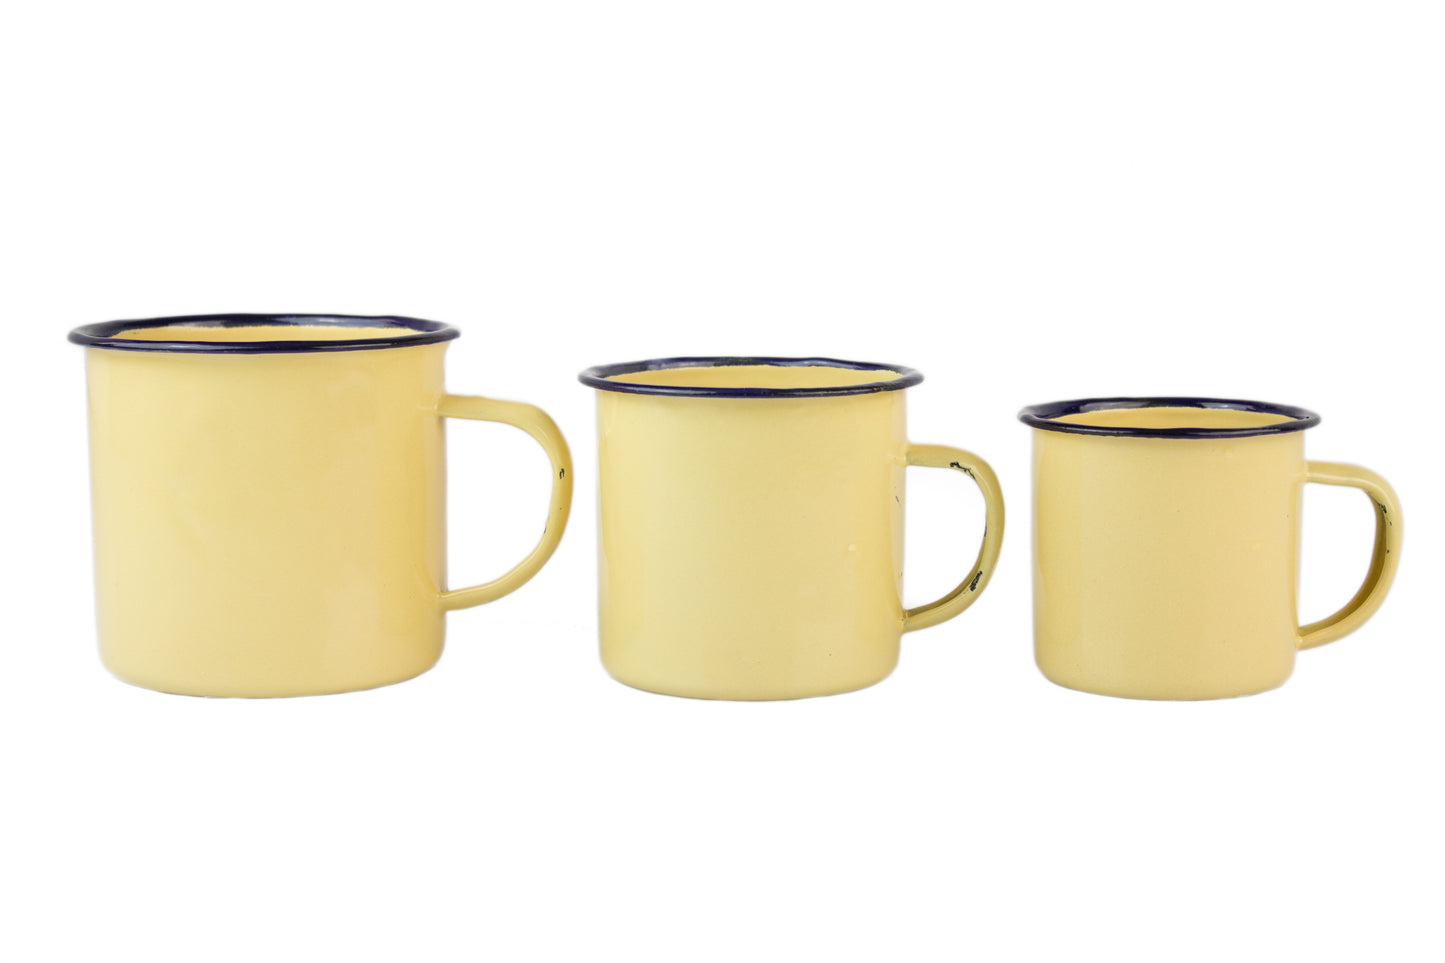 Mug - Set of 3 enameled in natural sienna tones